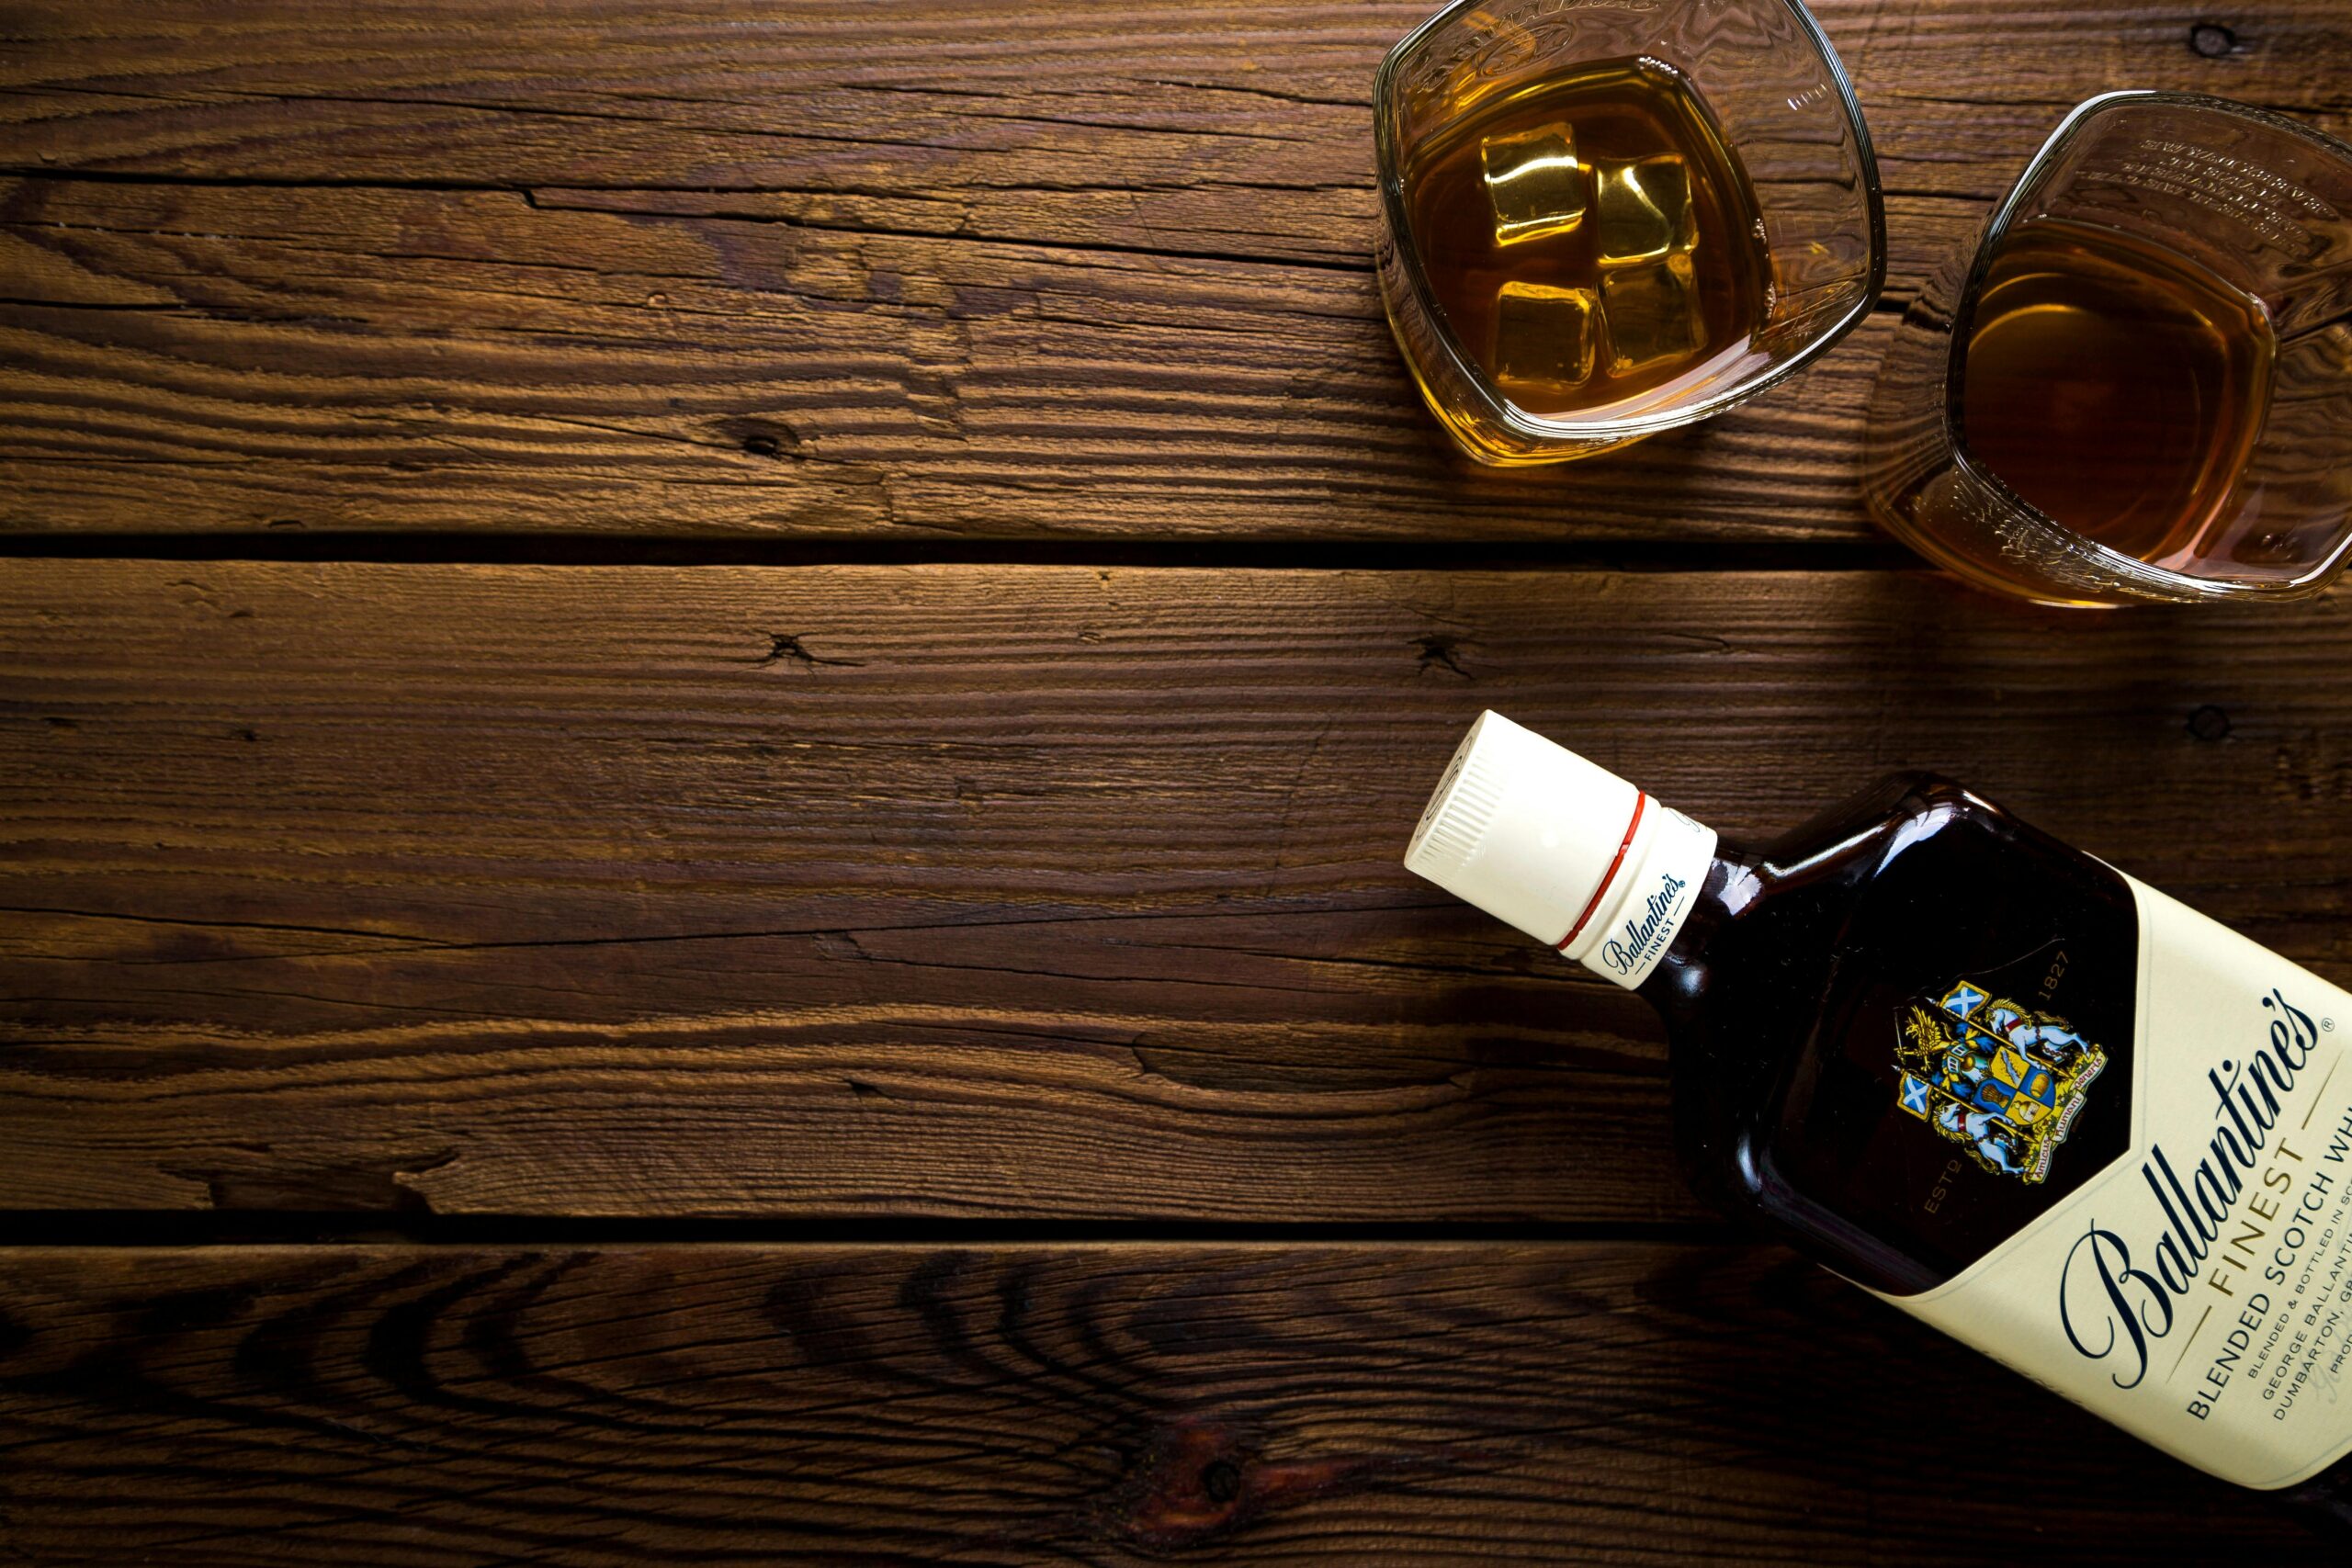 Buchanan’s Whisky: A Timeless Classic